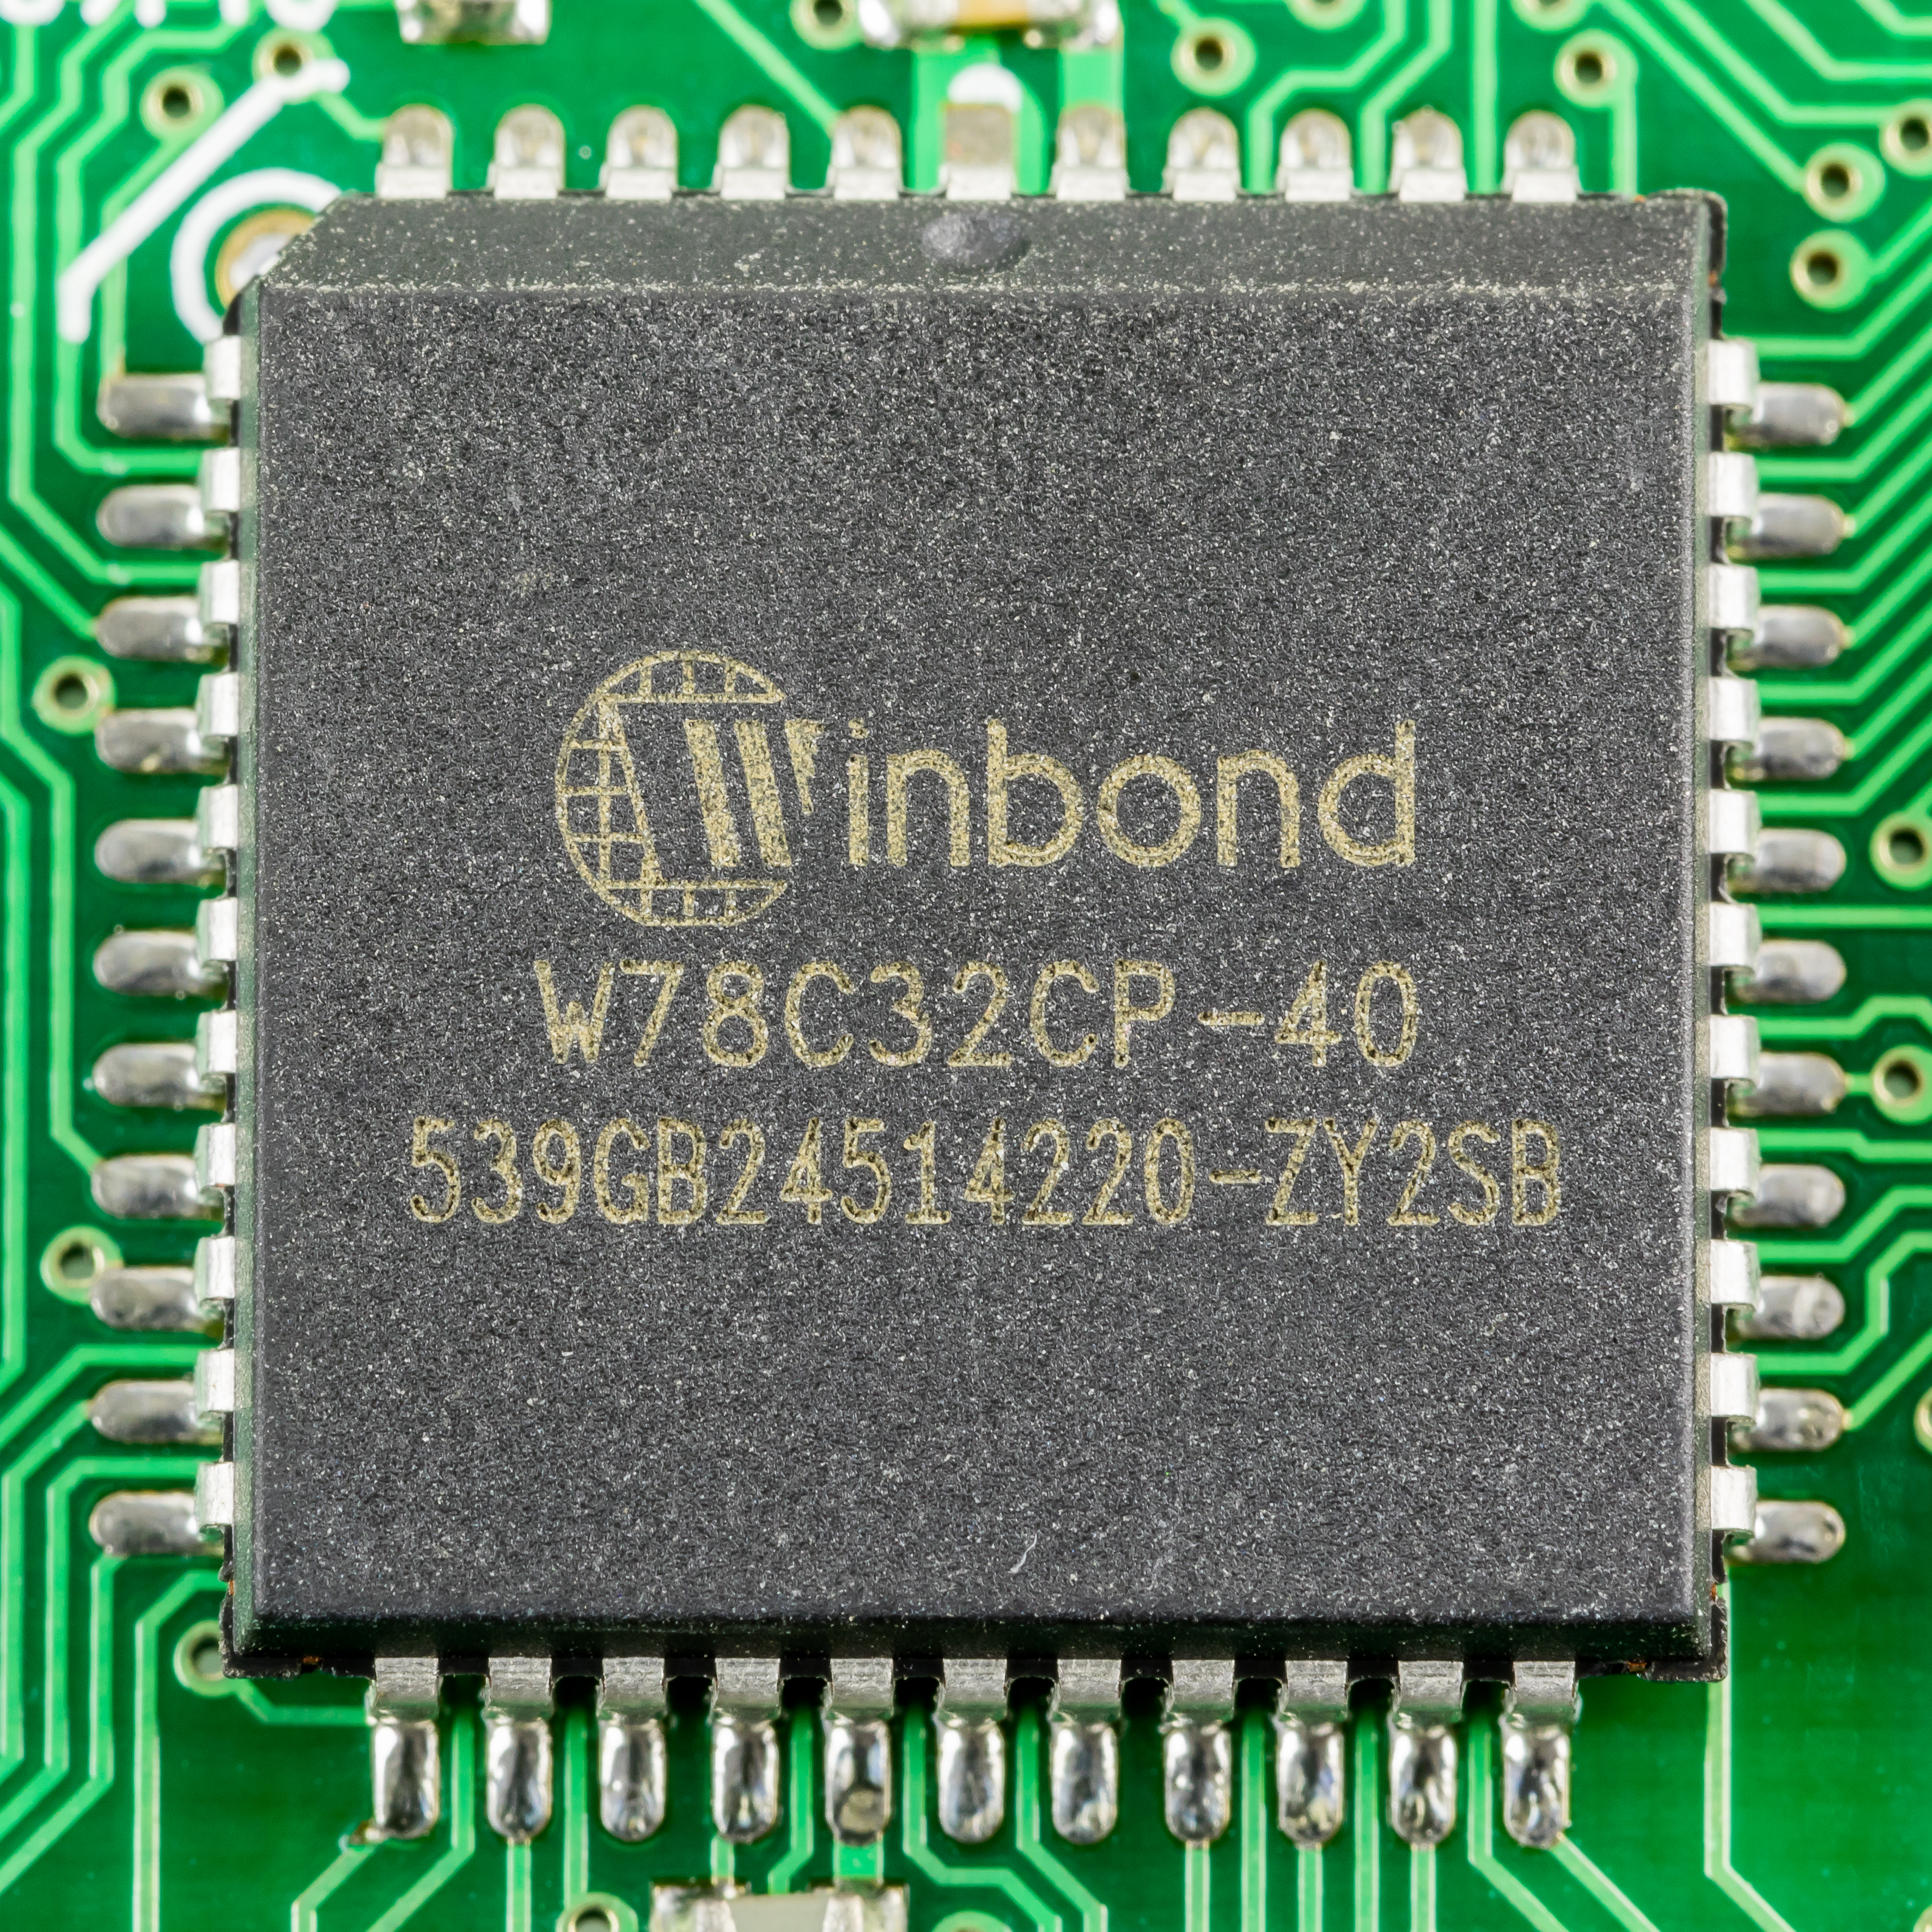 C 78. Winbond w78c32c-40. Контроллер Comfort 2000. Winbond bh5. Winbond 25032jvs10 1851.